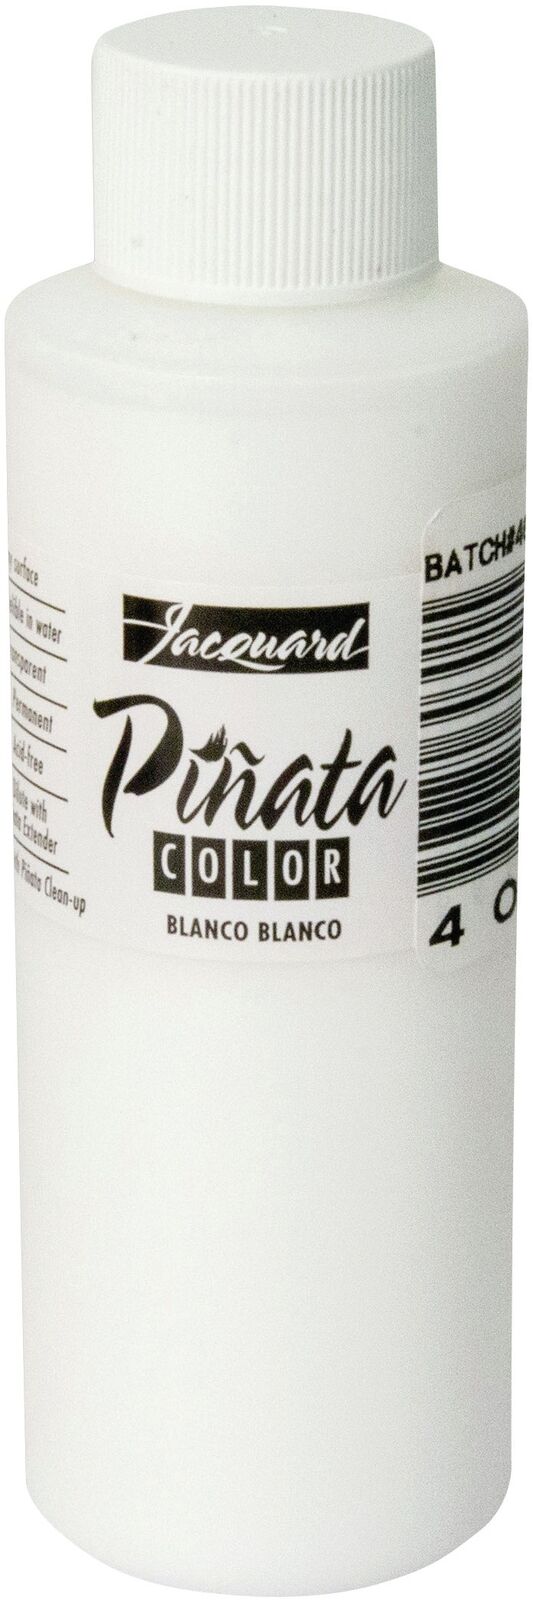 Jacquard Pinata Color Alcohol Ink 4oz-Blanco White - 6 Pack Jacquard Products JFC4OZ-3030